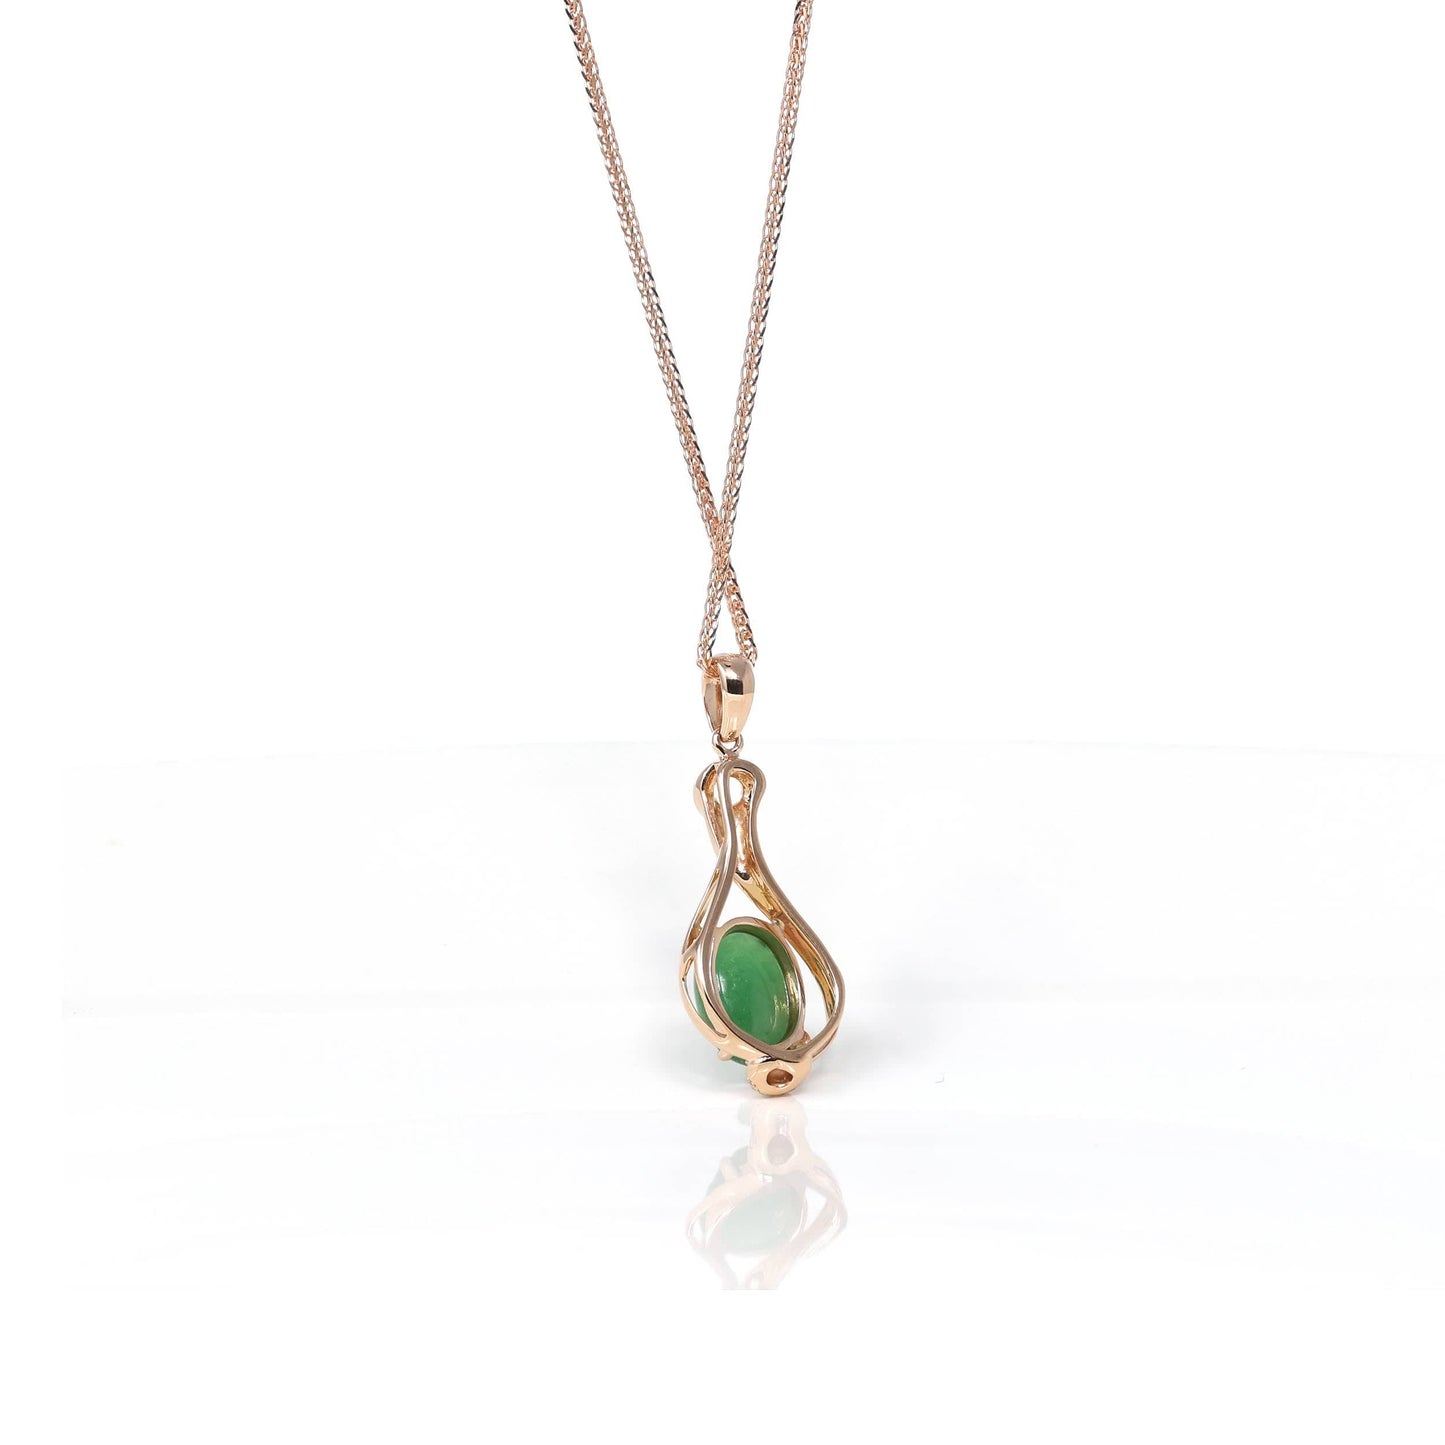 RealJade Co. 18k Gold Jadeite Necklace 18K Rose Gold Oval Imperial Jadeite Jade Cabochon Necklace with Diamonds